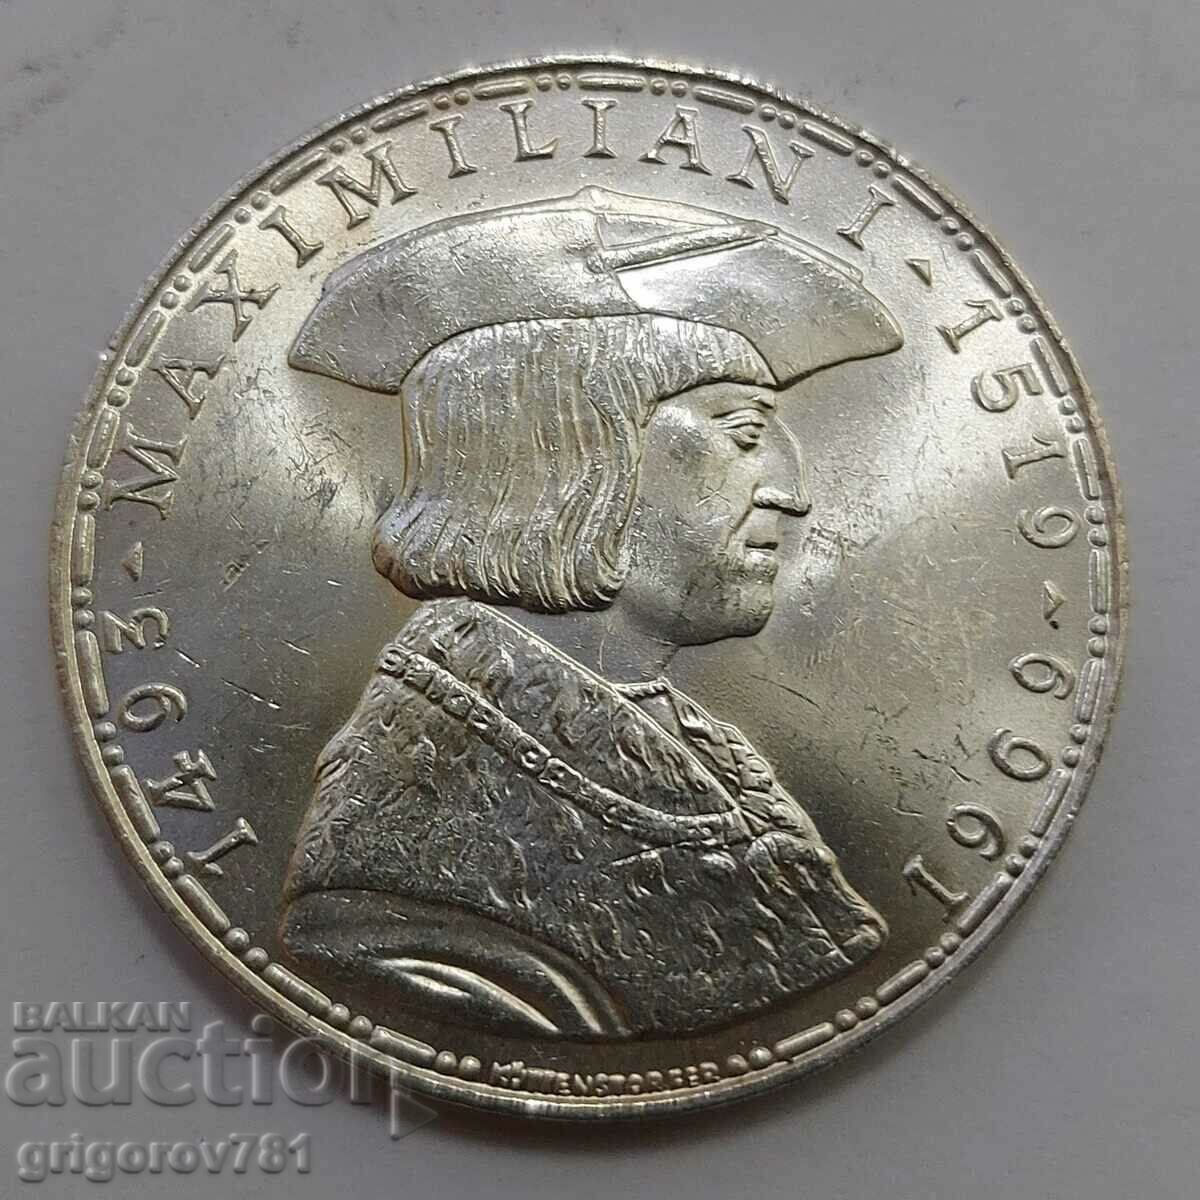 50 shillings silver Austria 1969 - silver coin